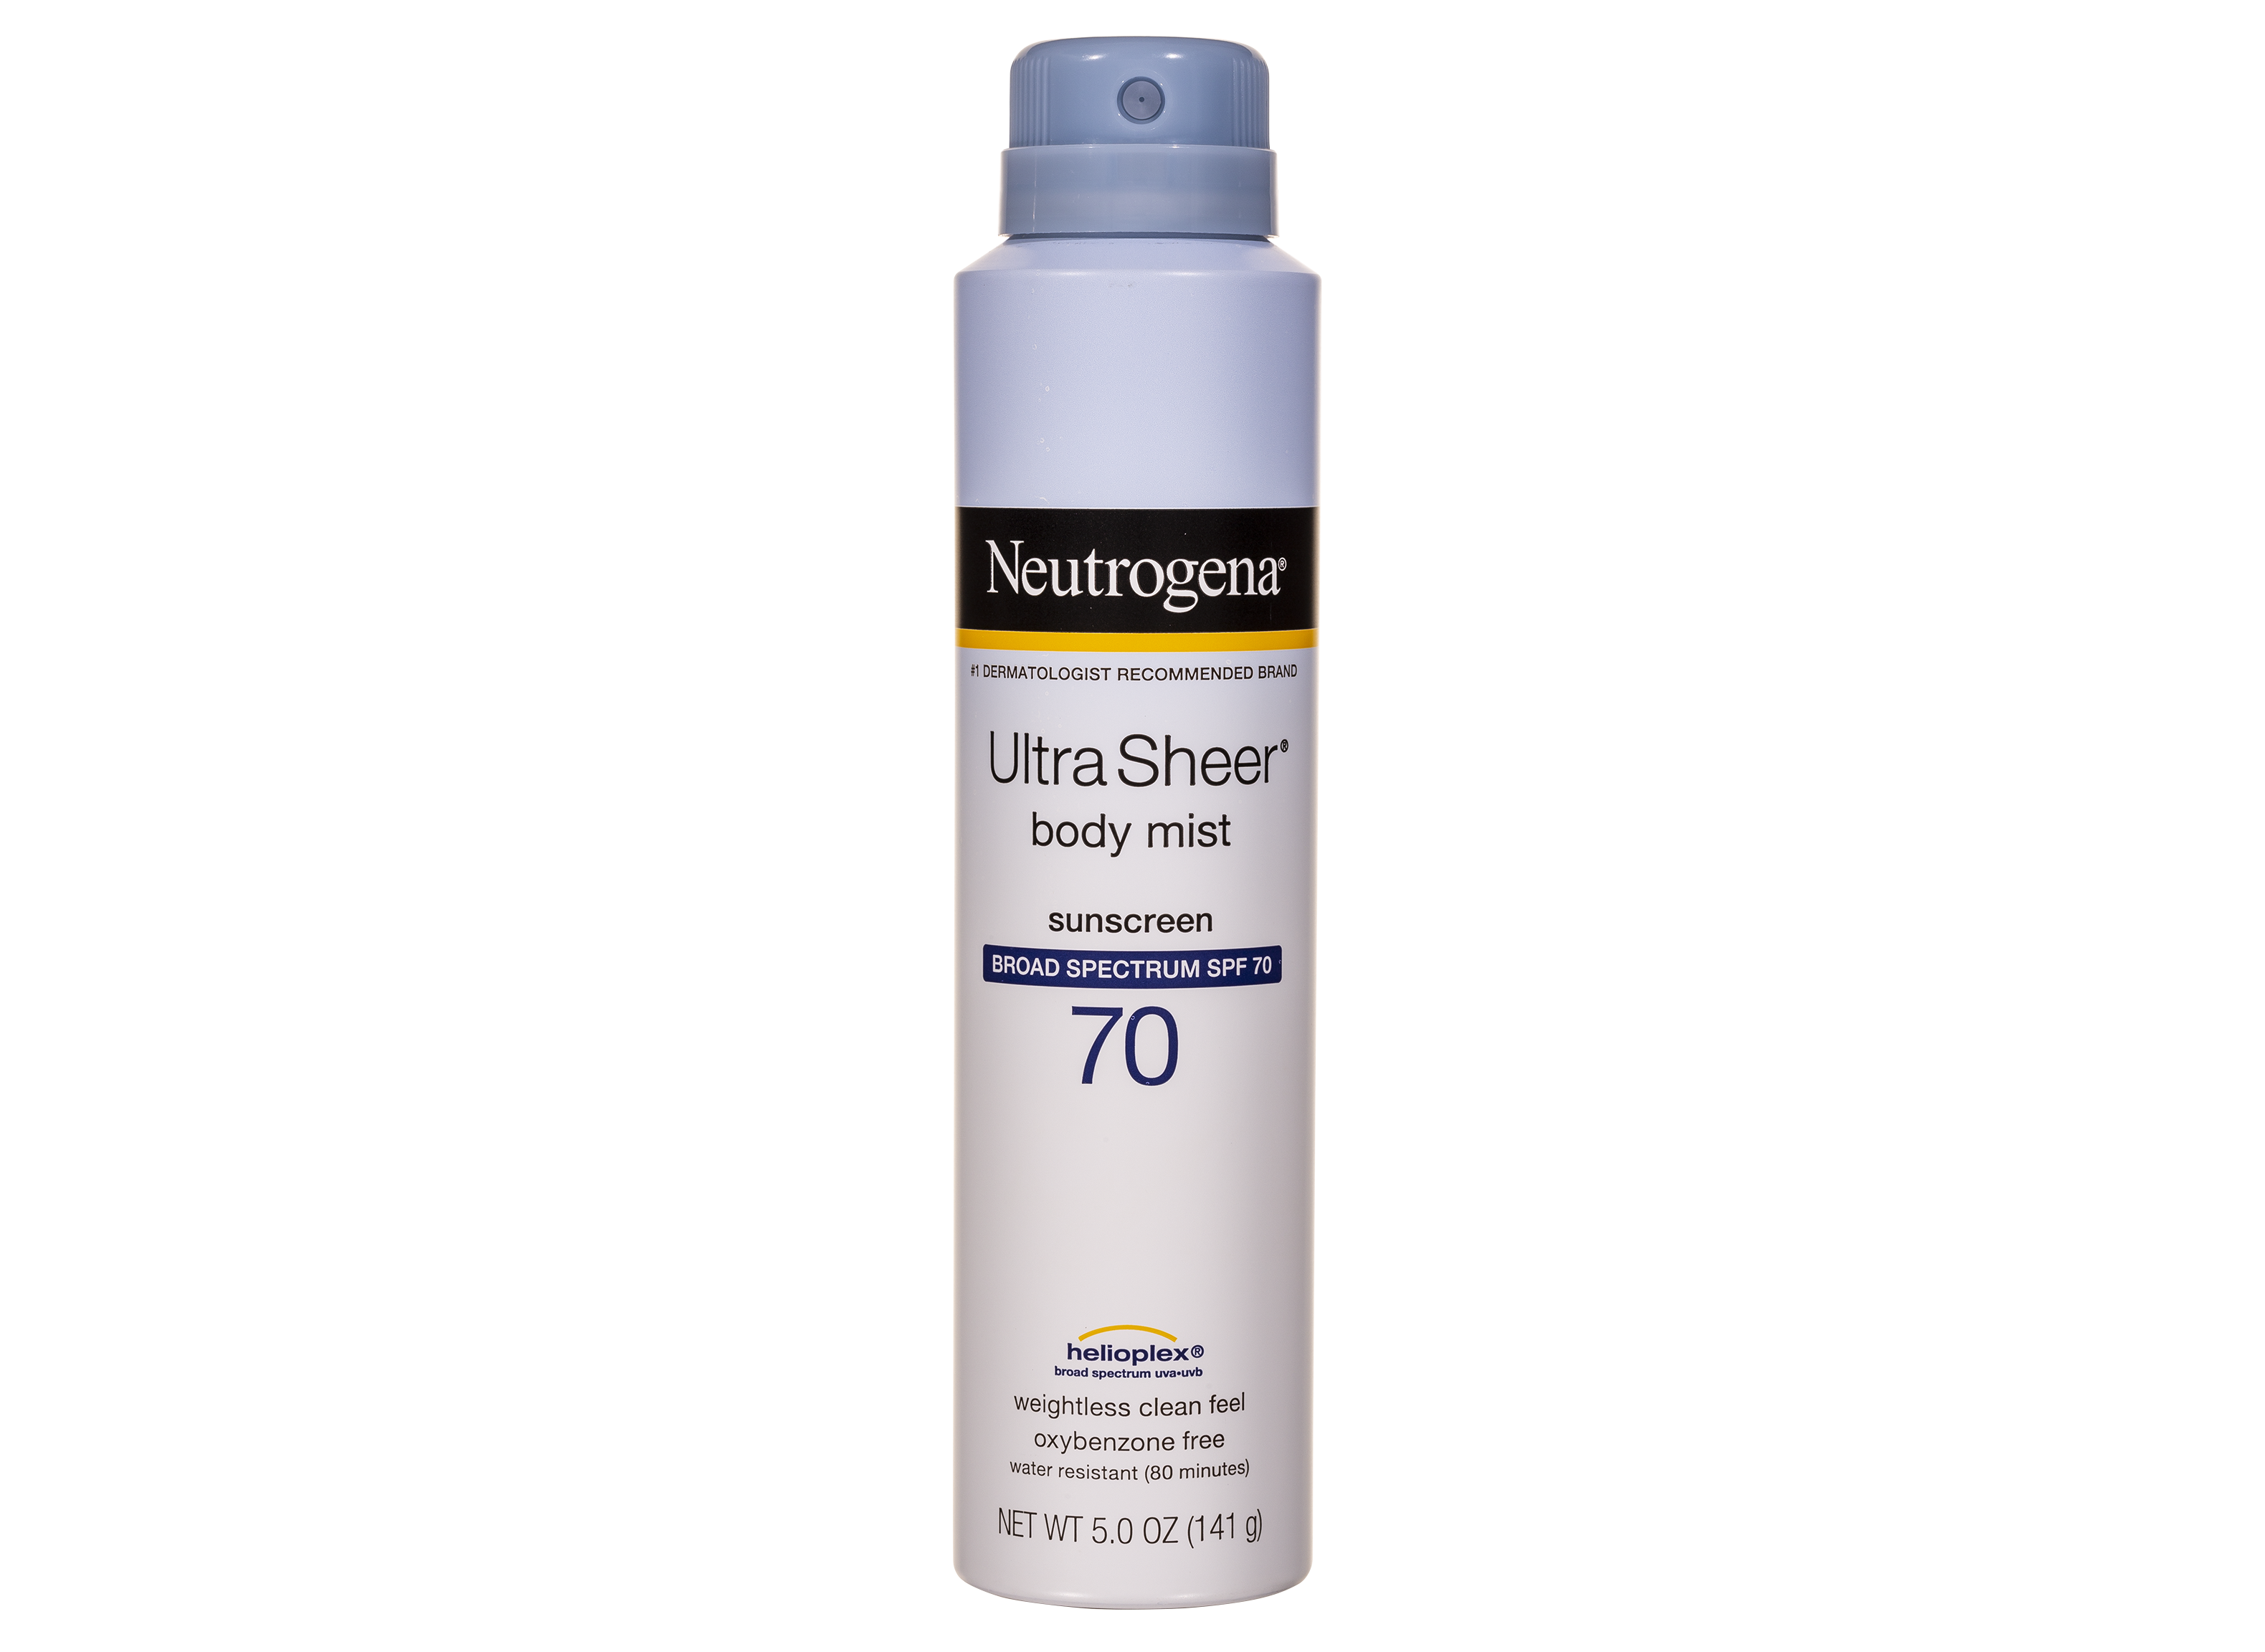 Neutrogena Ultra Sheer Body Mist SPF 70 Sunscreen Review - Consumer Reports